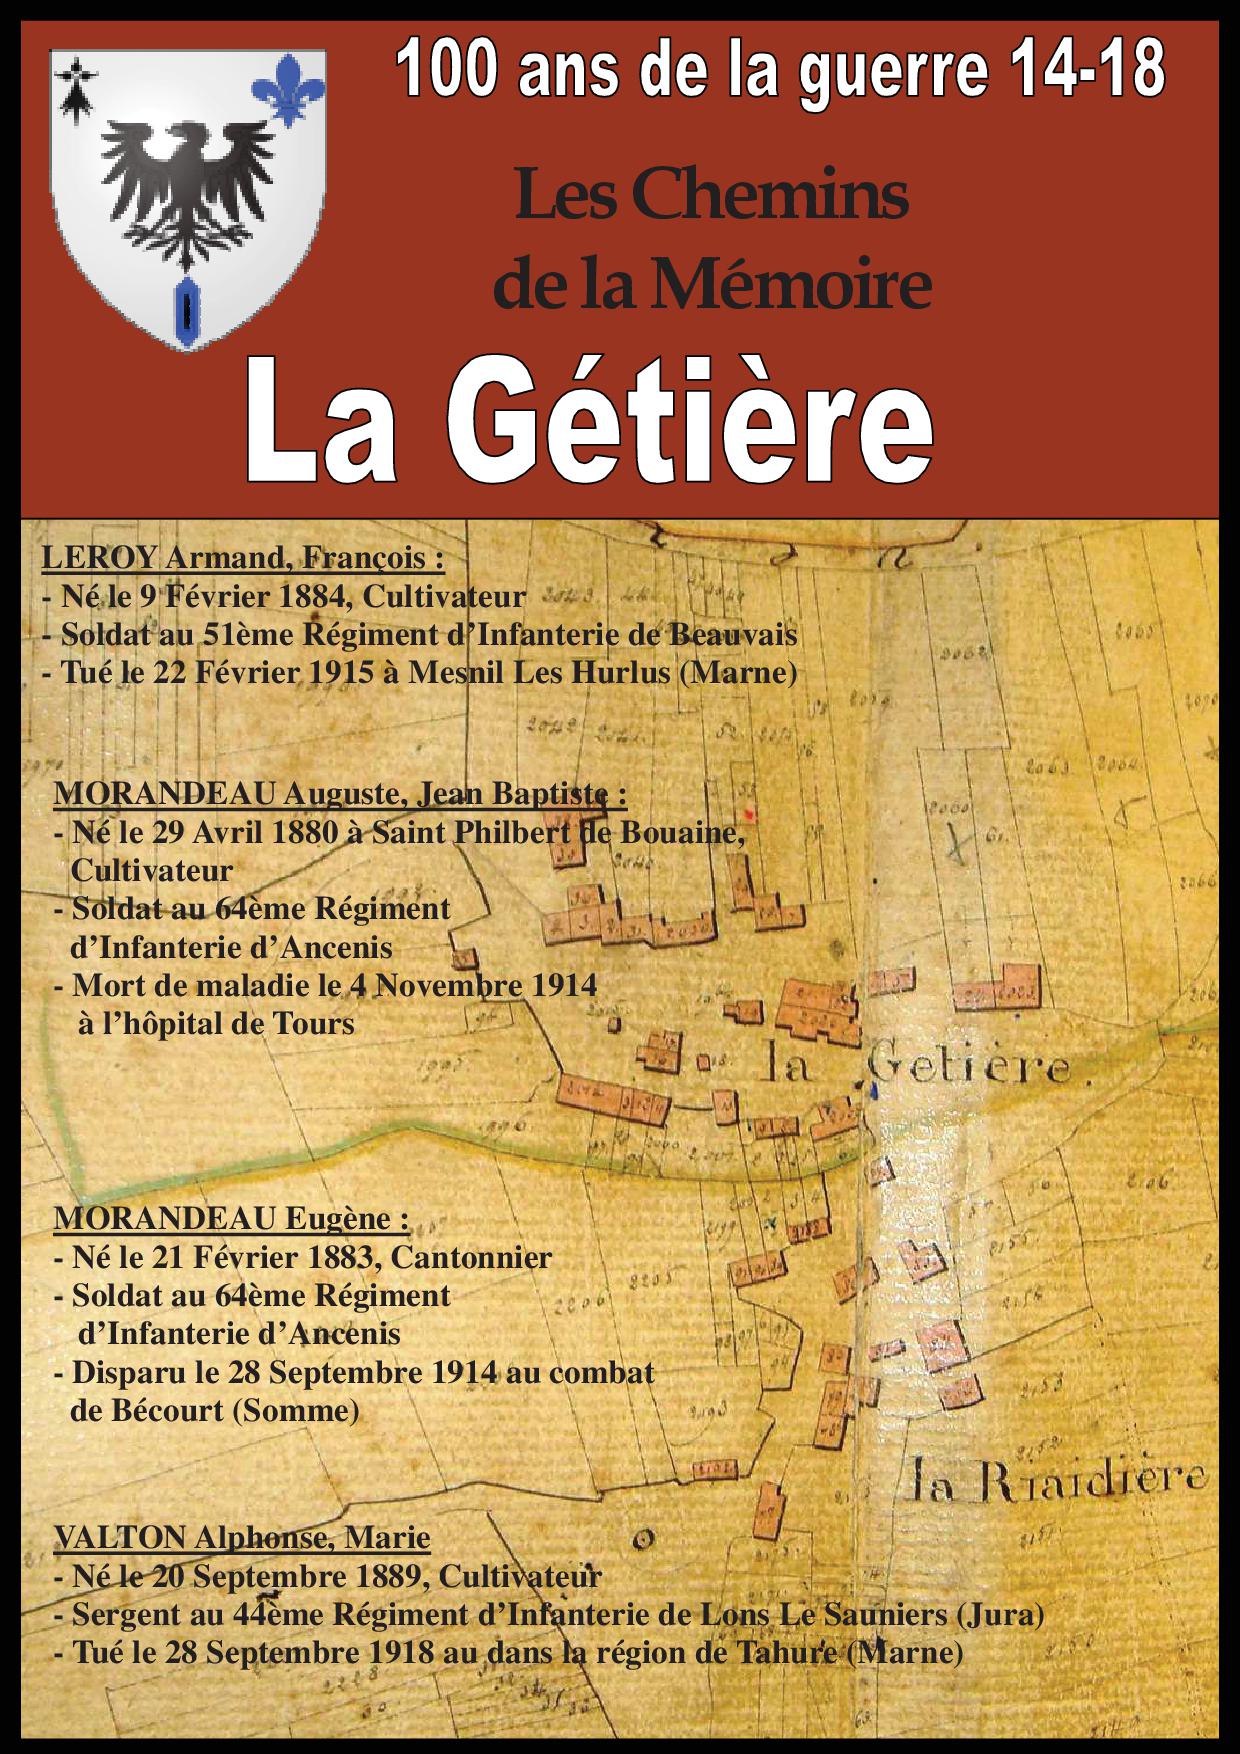 La Gétière2.jpg